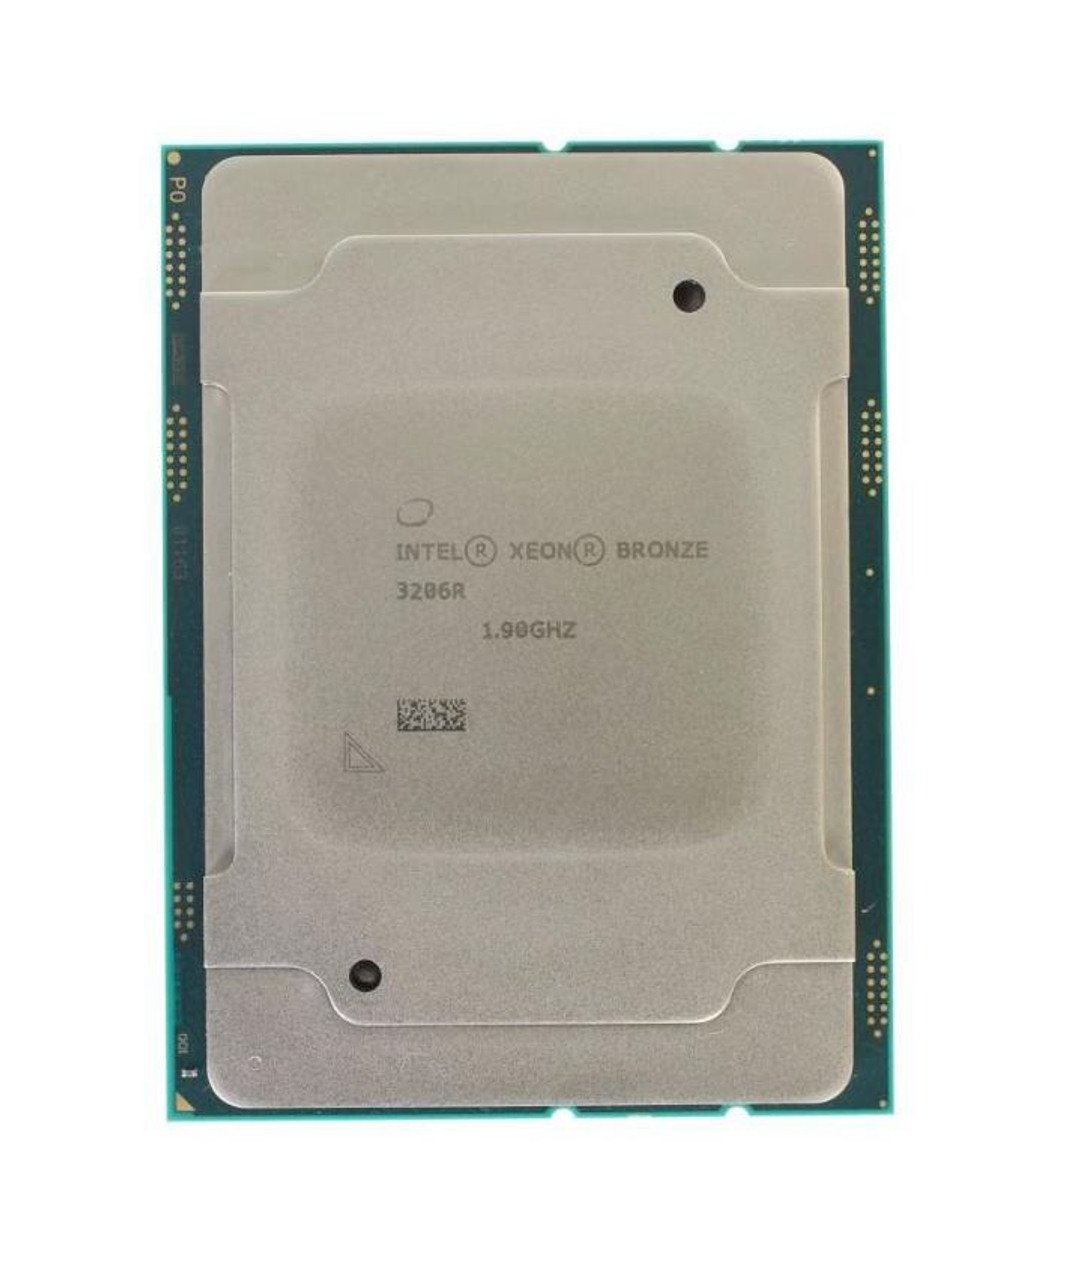 Dell CPU Kit Intel Xeon Bronze 8 Core Processor 3206r 1.90GHz 11mb Cache Tdp 85w Fclga3647 For Dell Precision 7820 Tower Workstation ( T7820 ) (